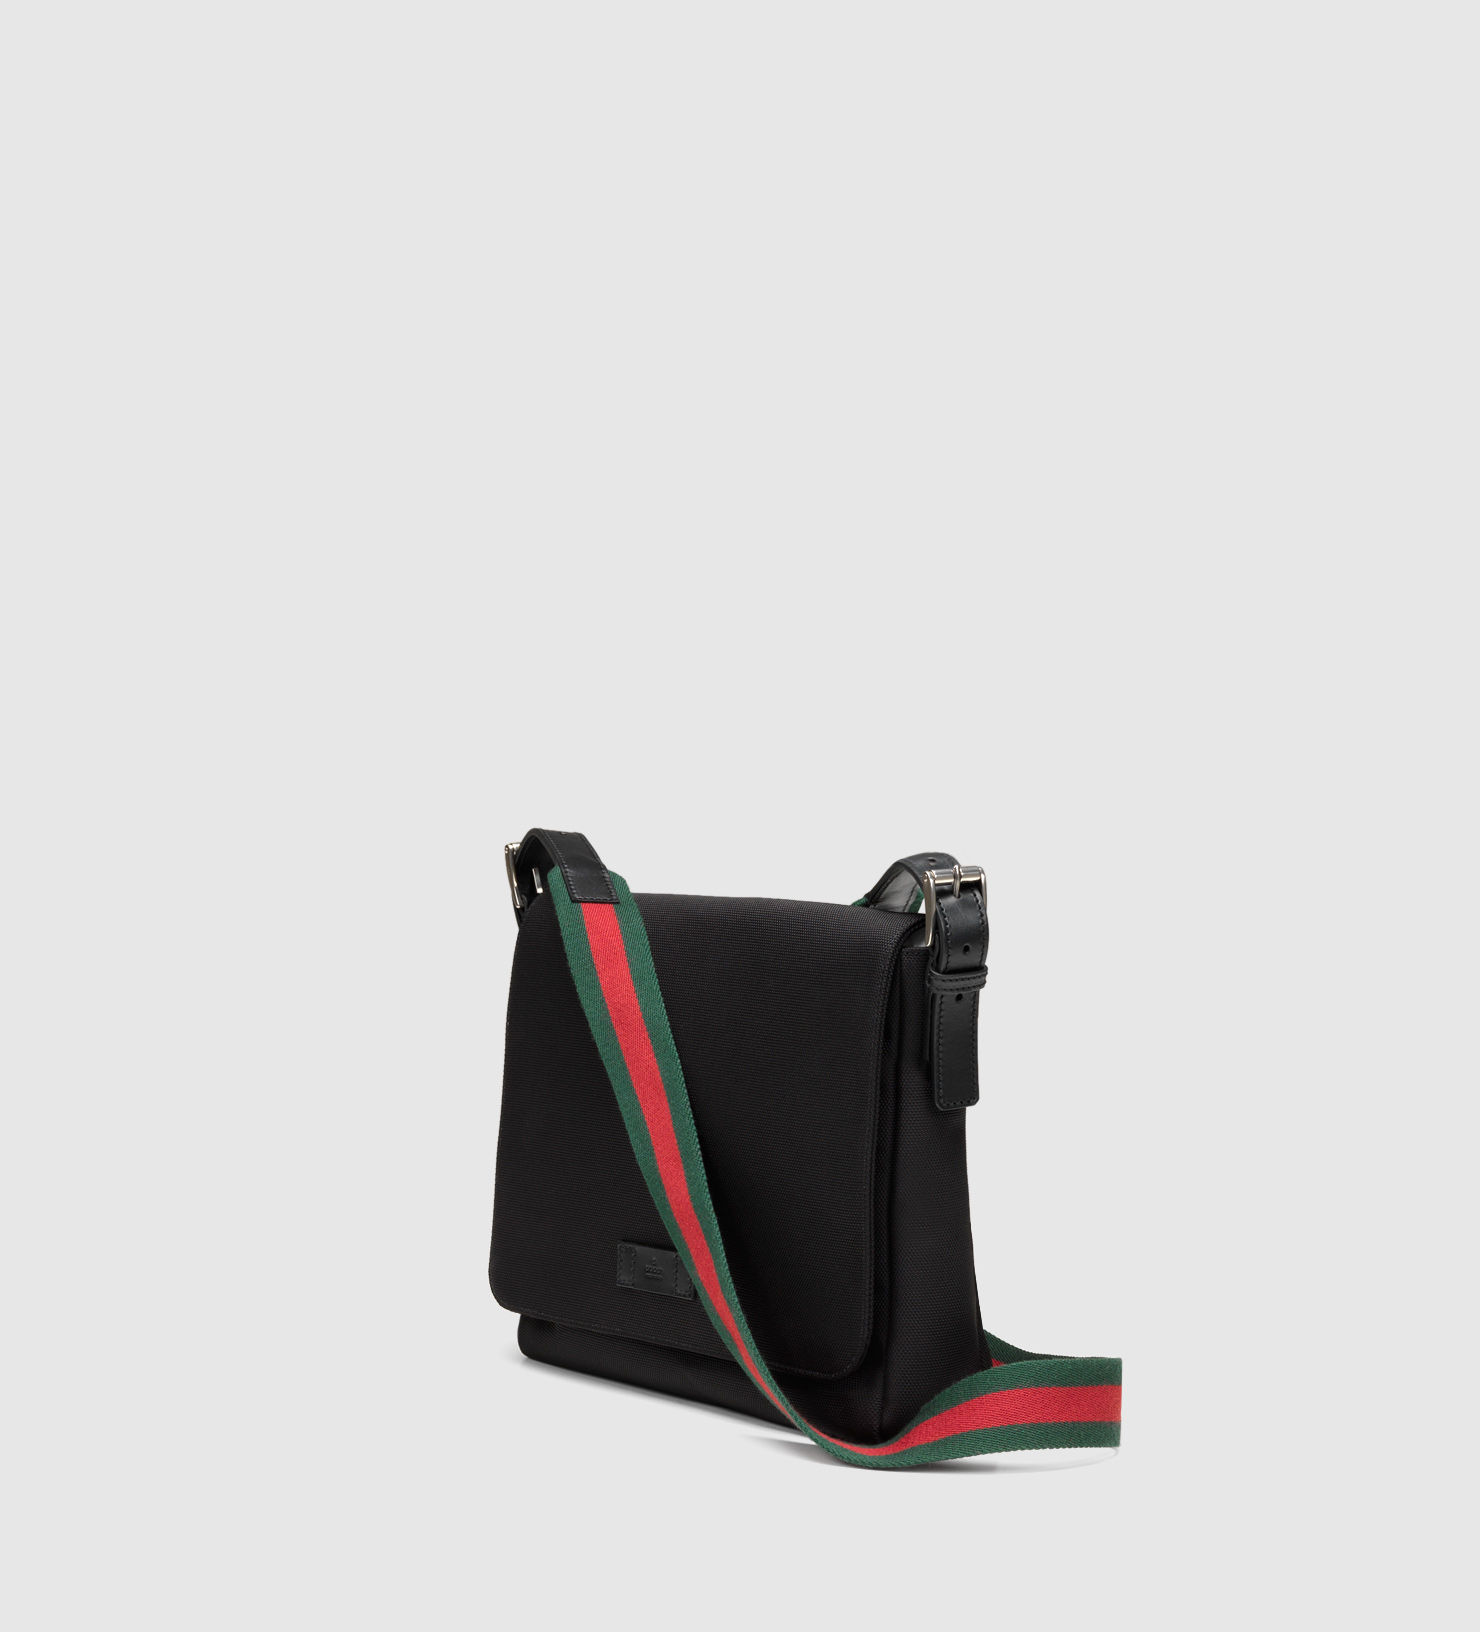 Gucci Black Techno Canvas Messenger Bag for Men - Lyst